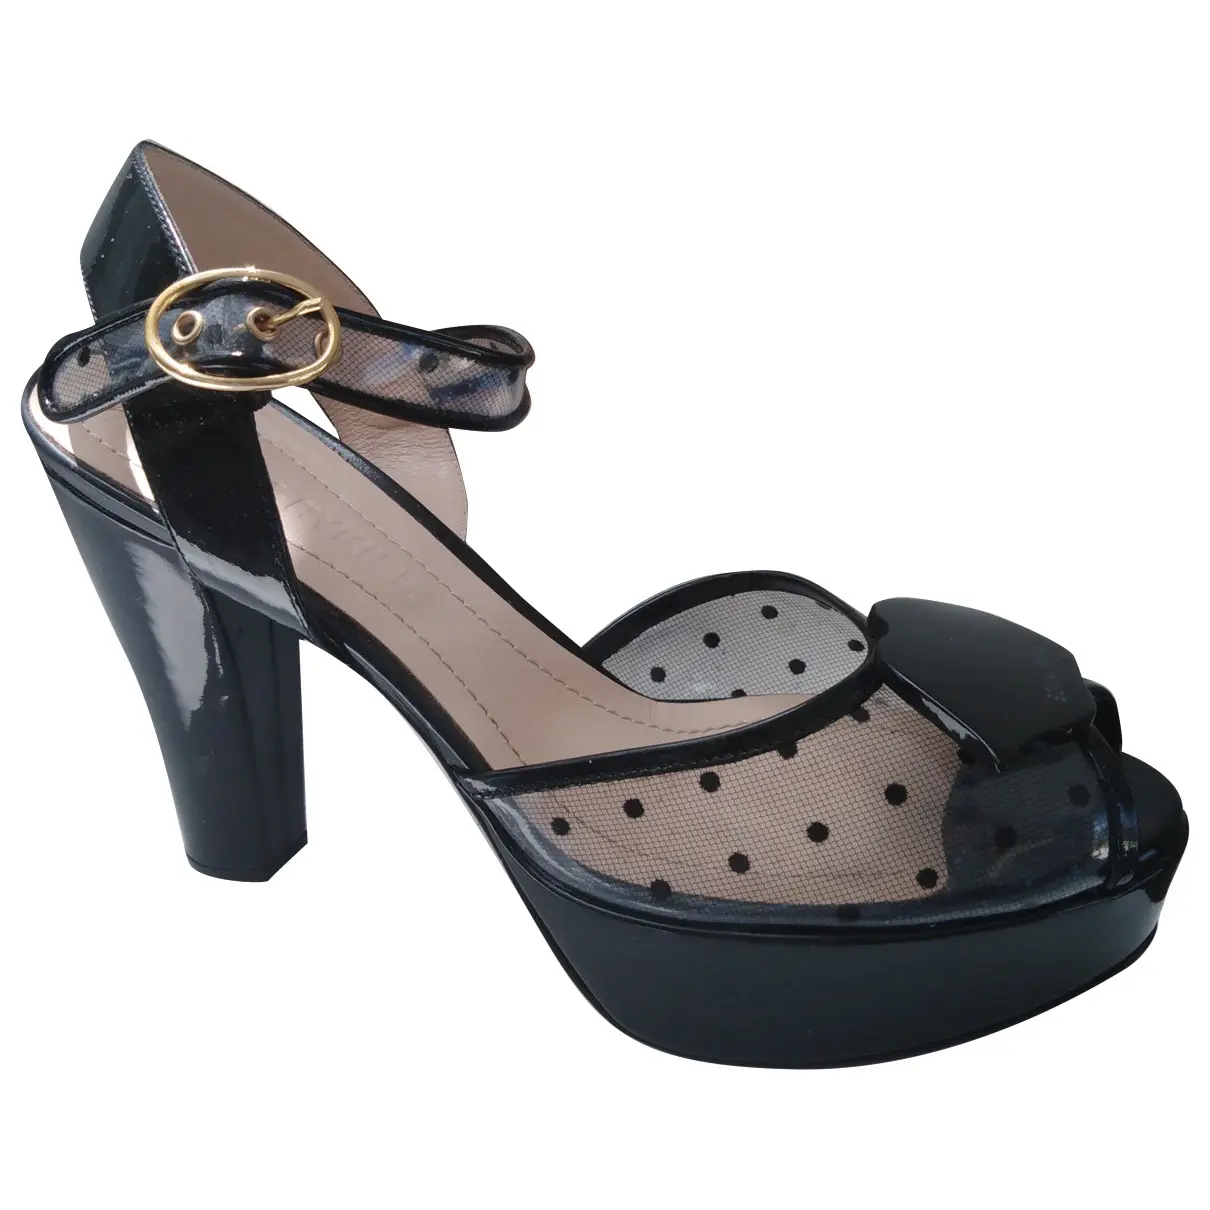 Patent leather sandals Sonia Rykiel